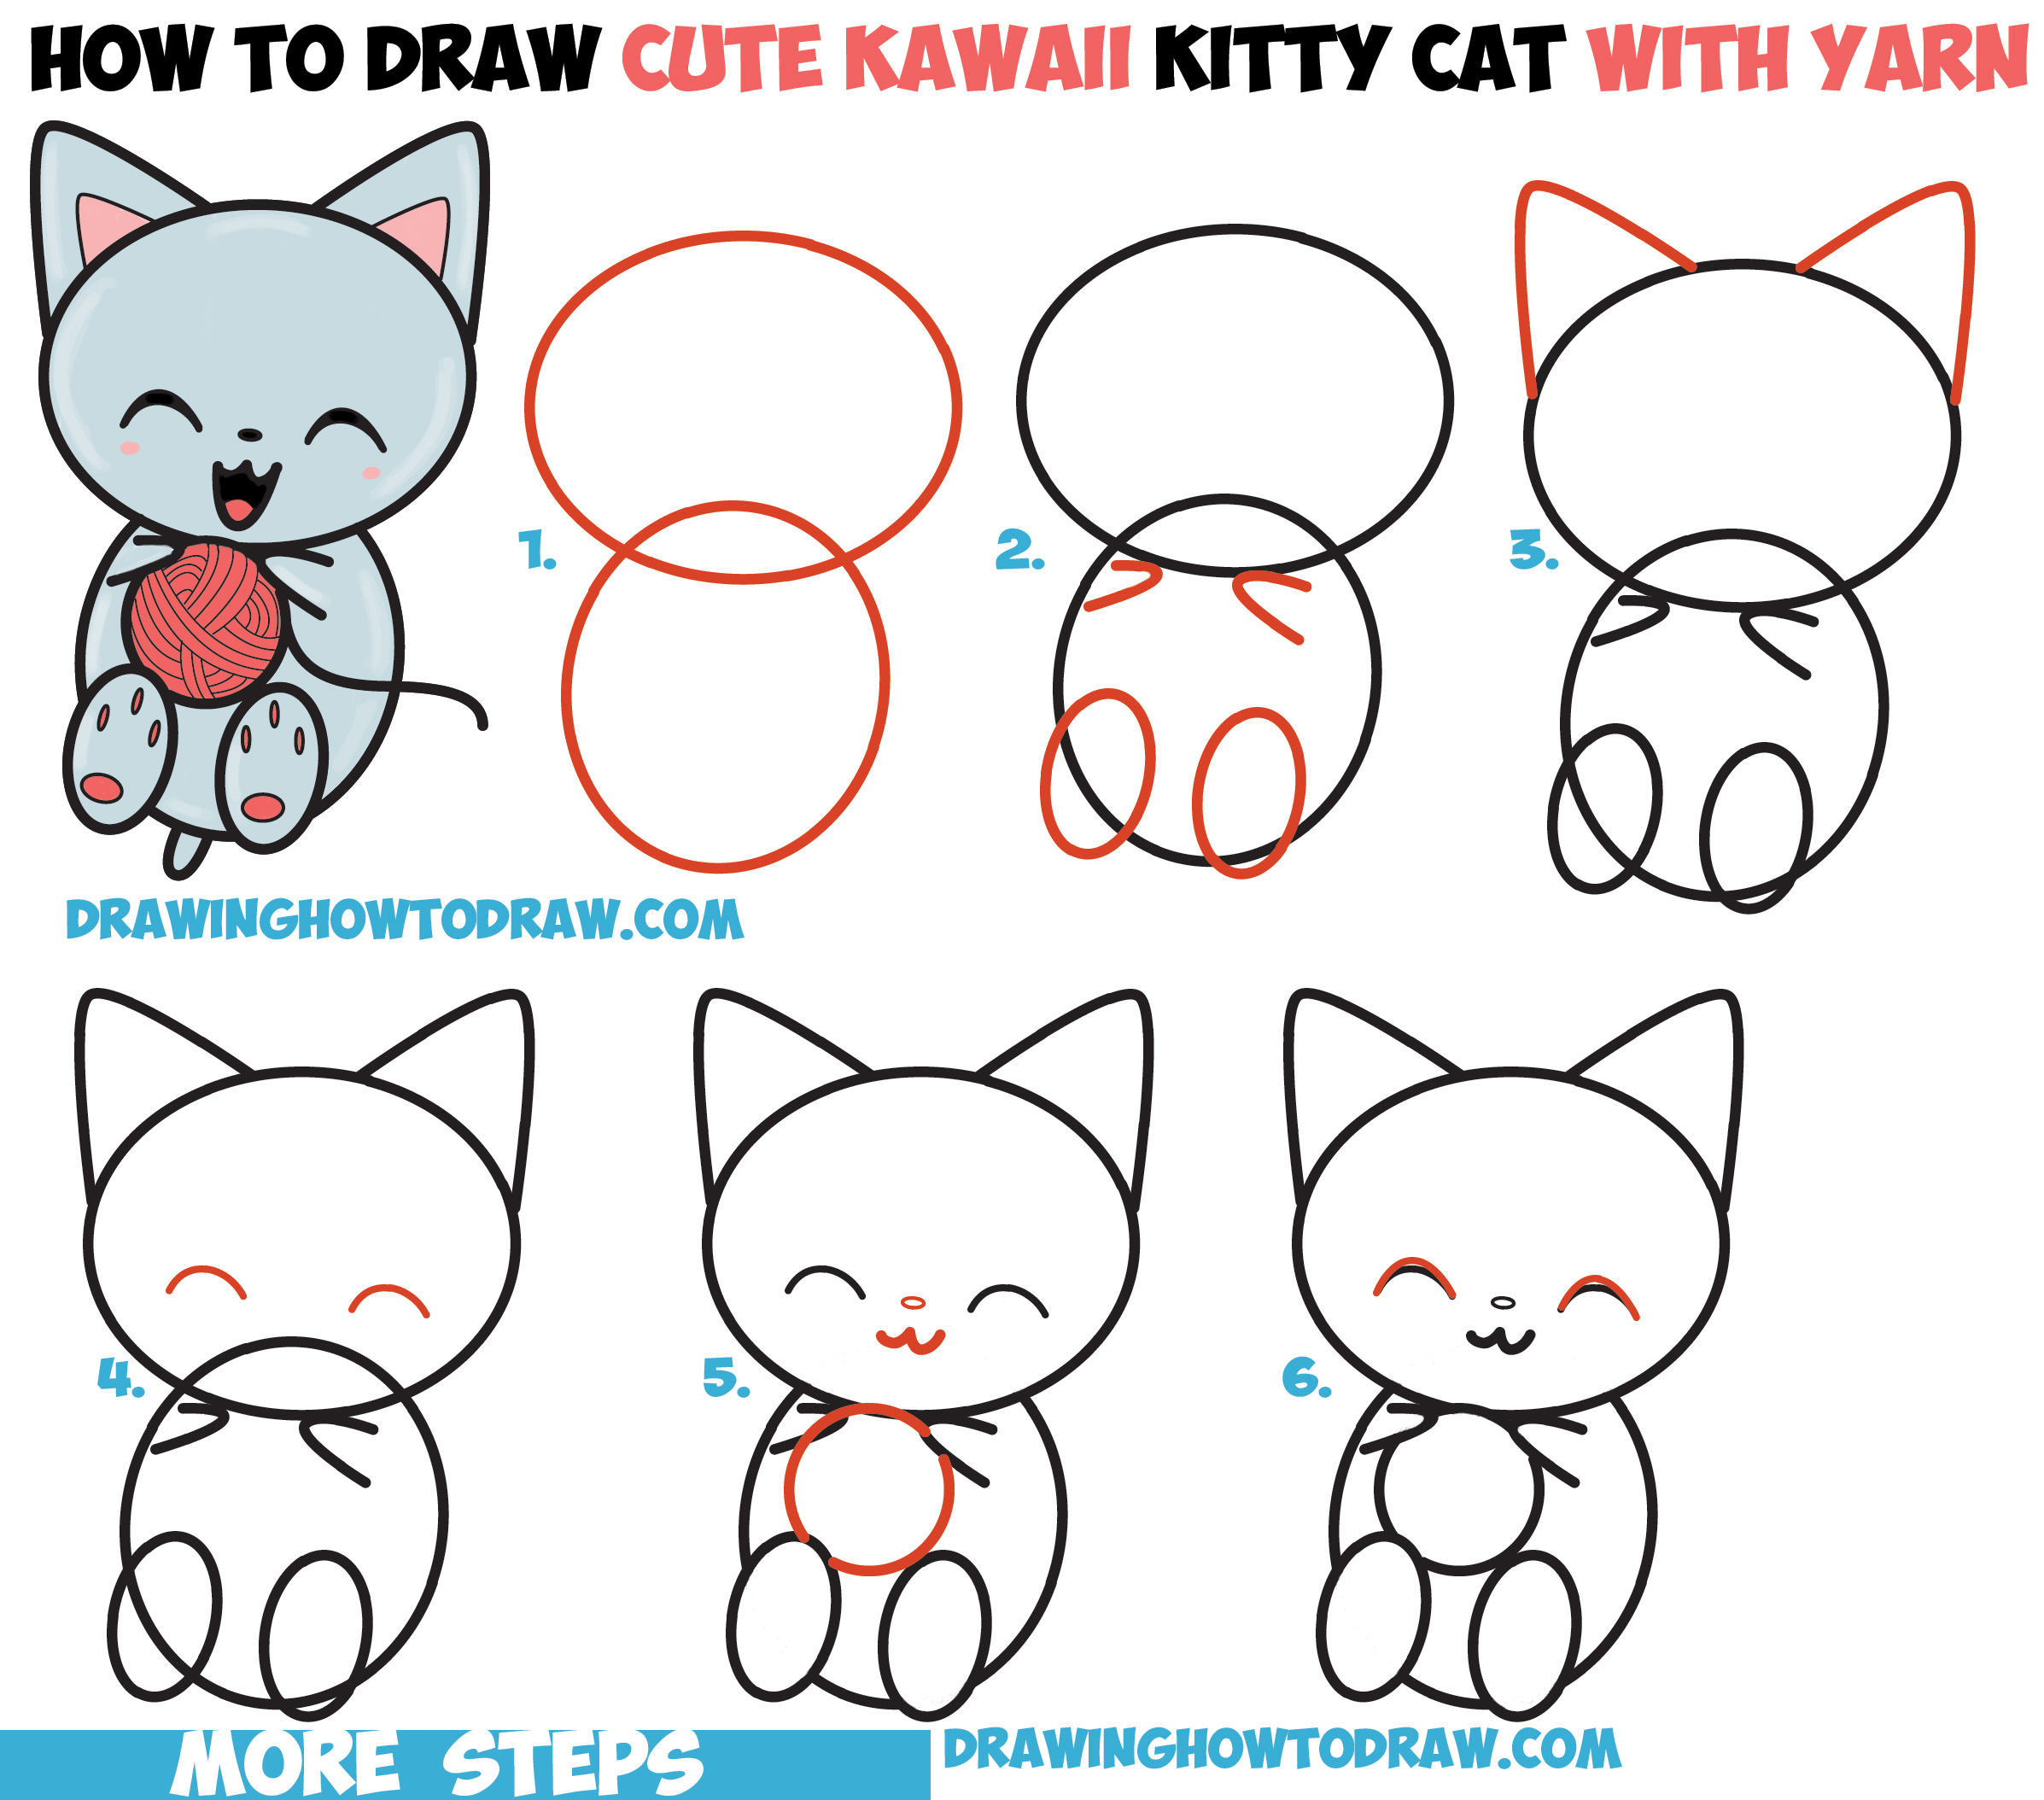 How to Draw Cute Kawaii Kitten / Cat Playing with Yarn